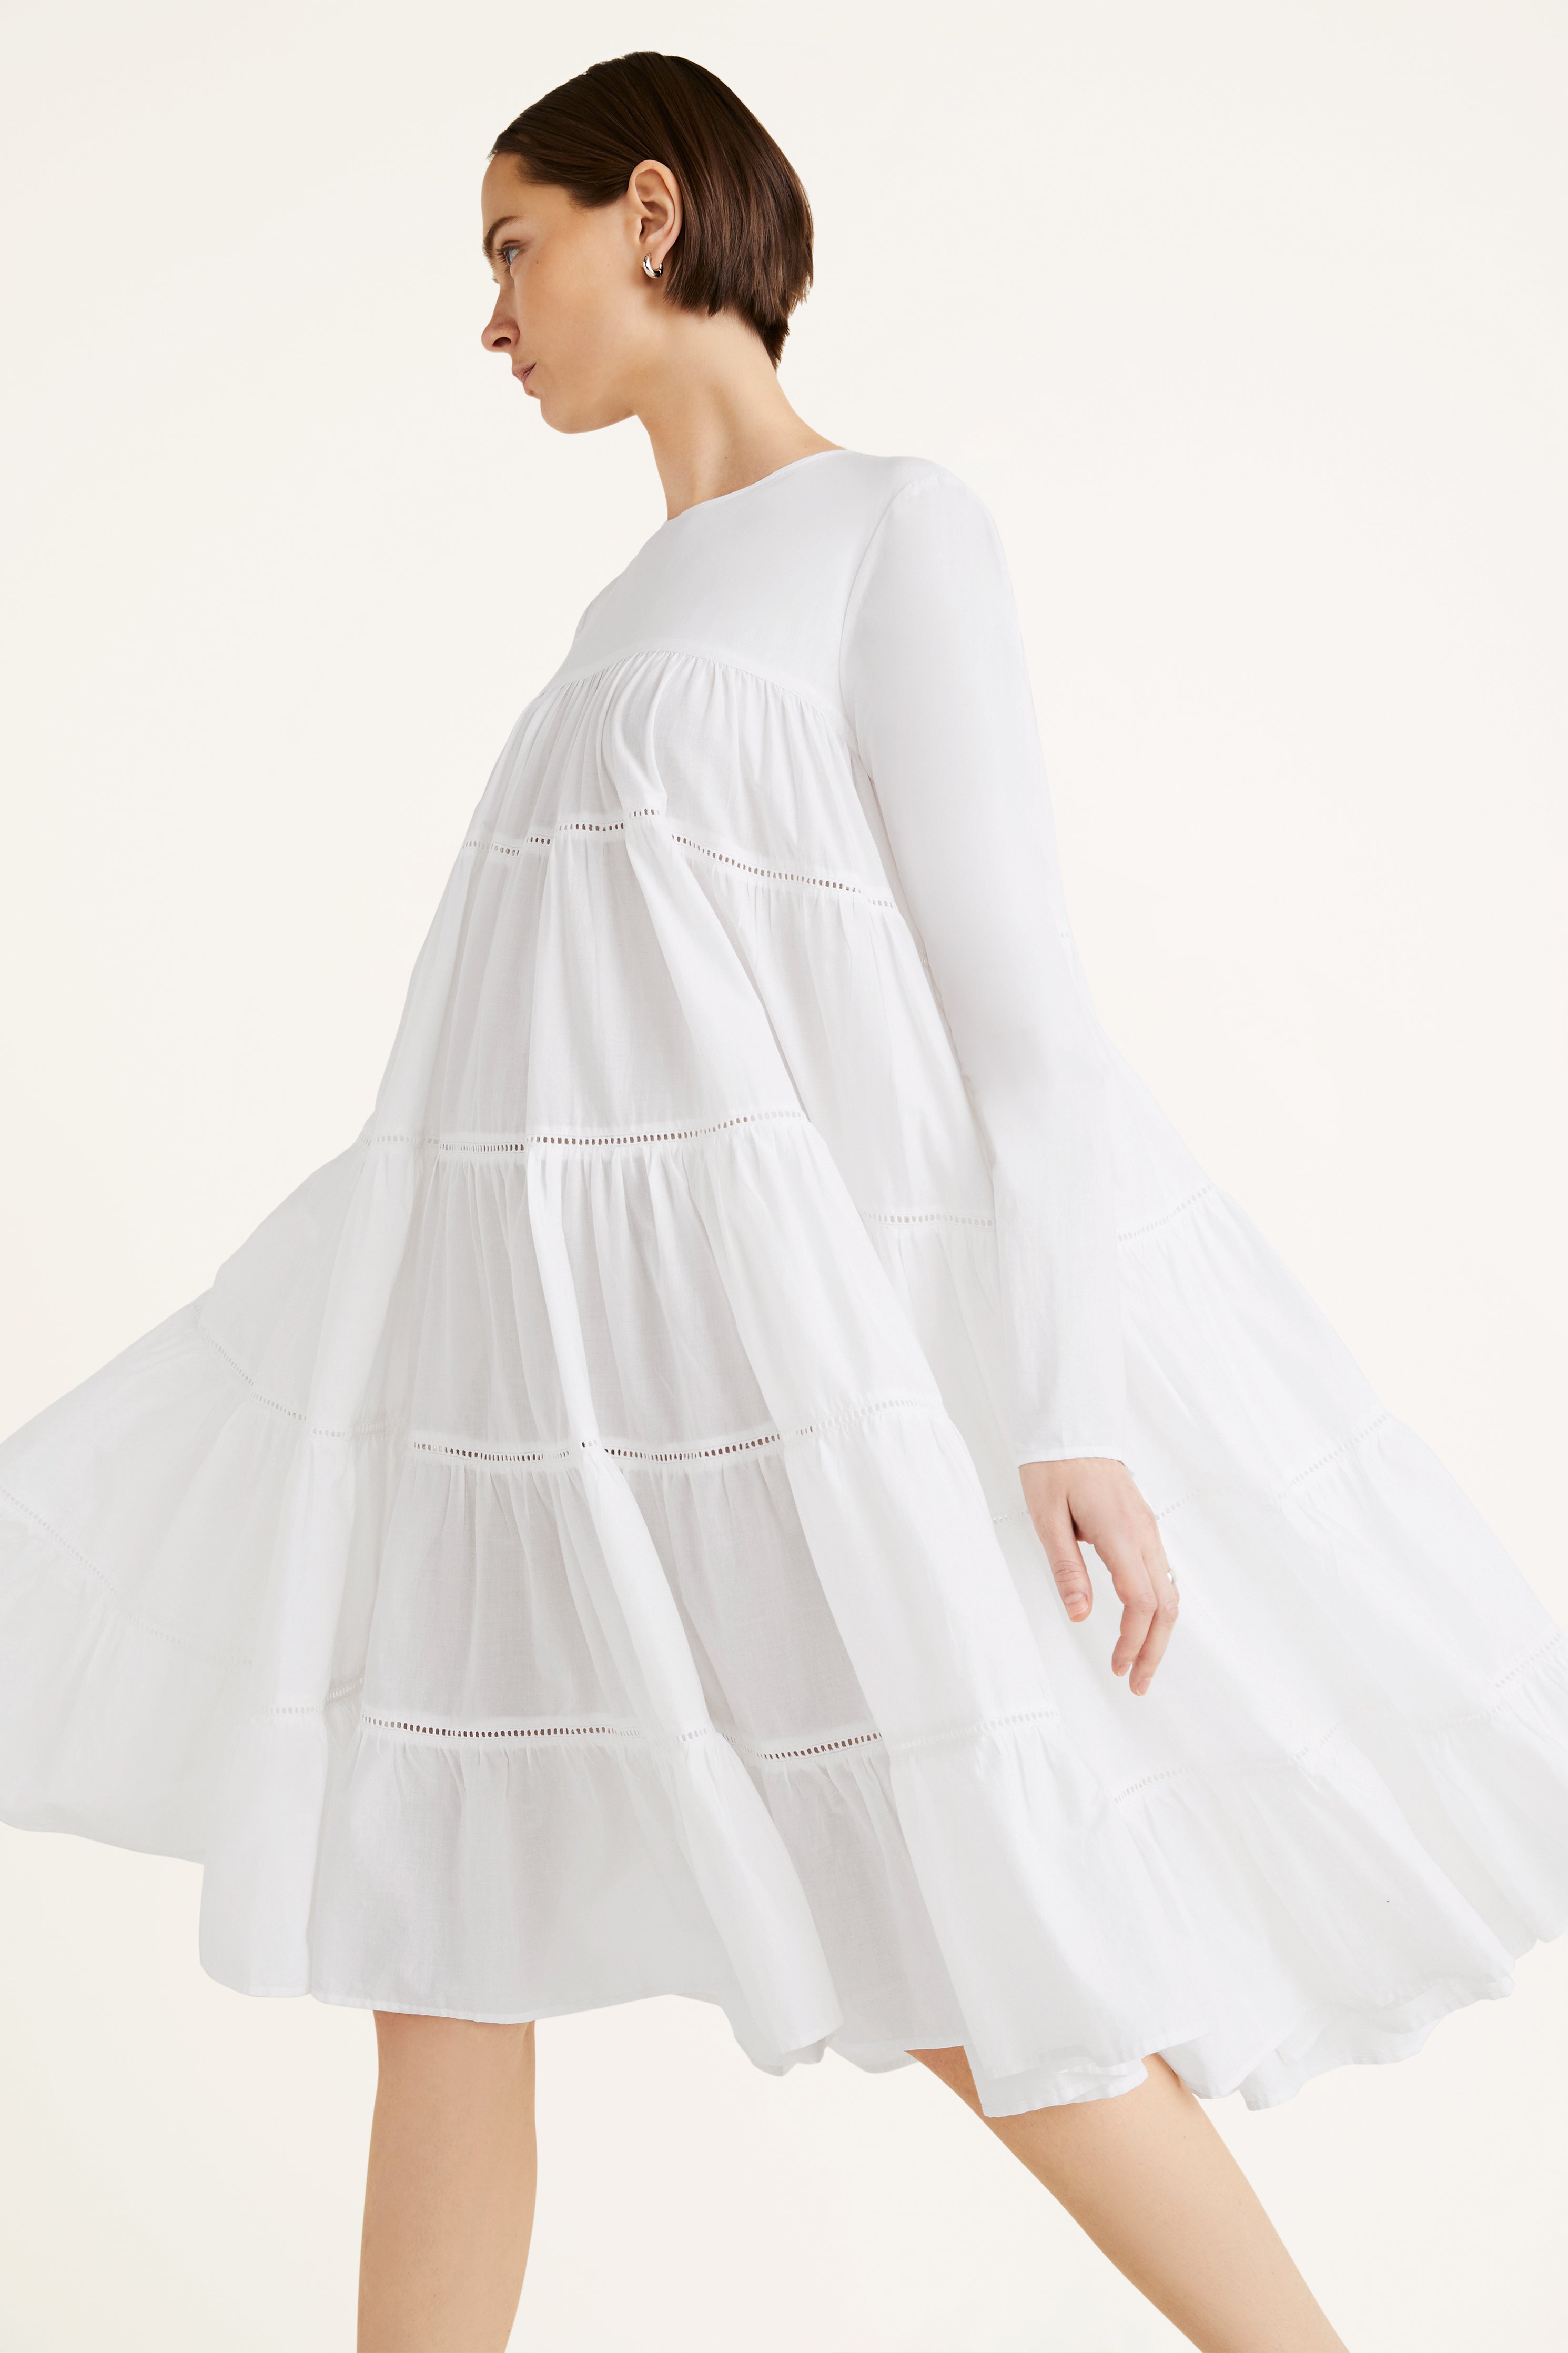 Essaouira Dress in White – Merlette